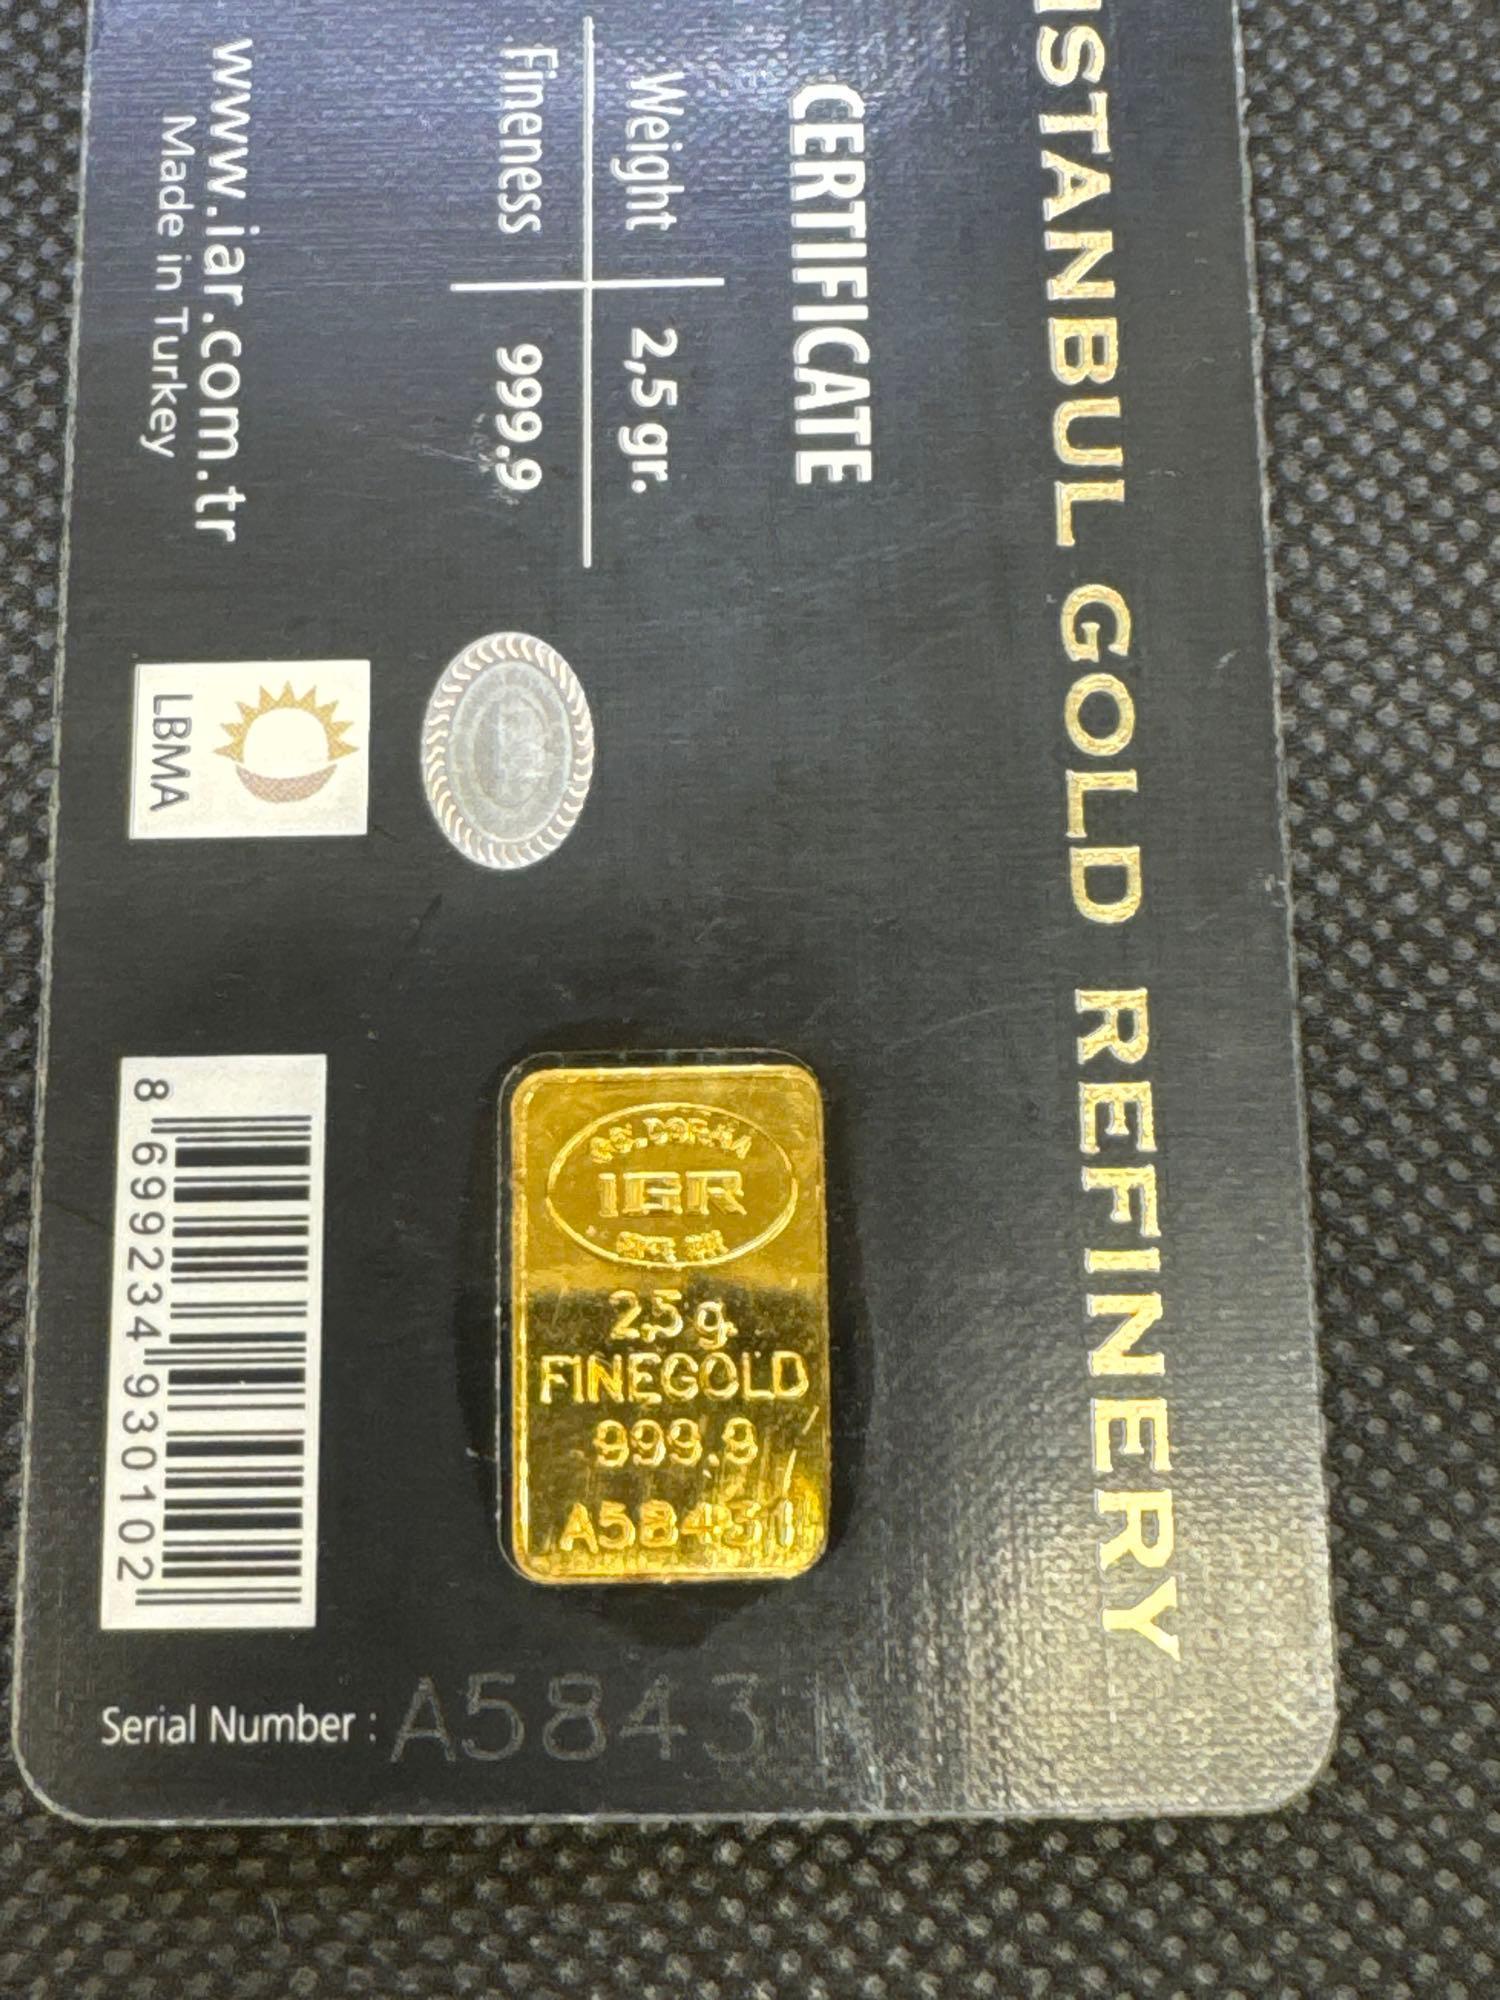 Muckleshoot Casion 2.5 Gram 999.9 Fine Gold Bar